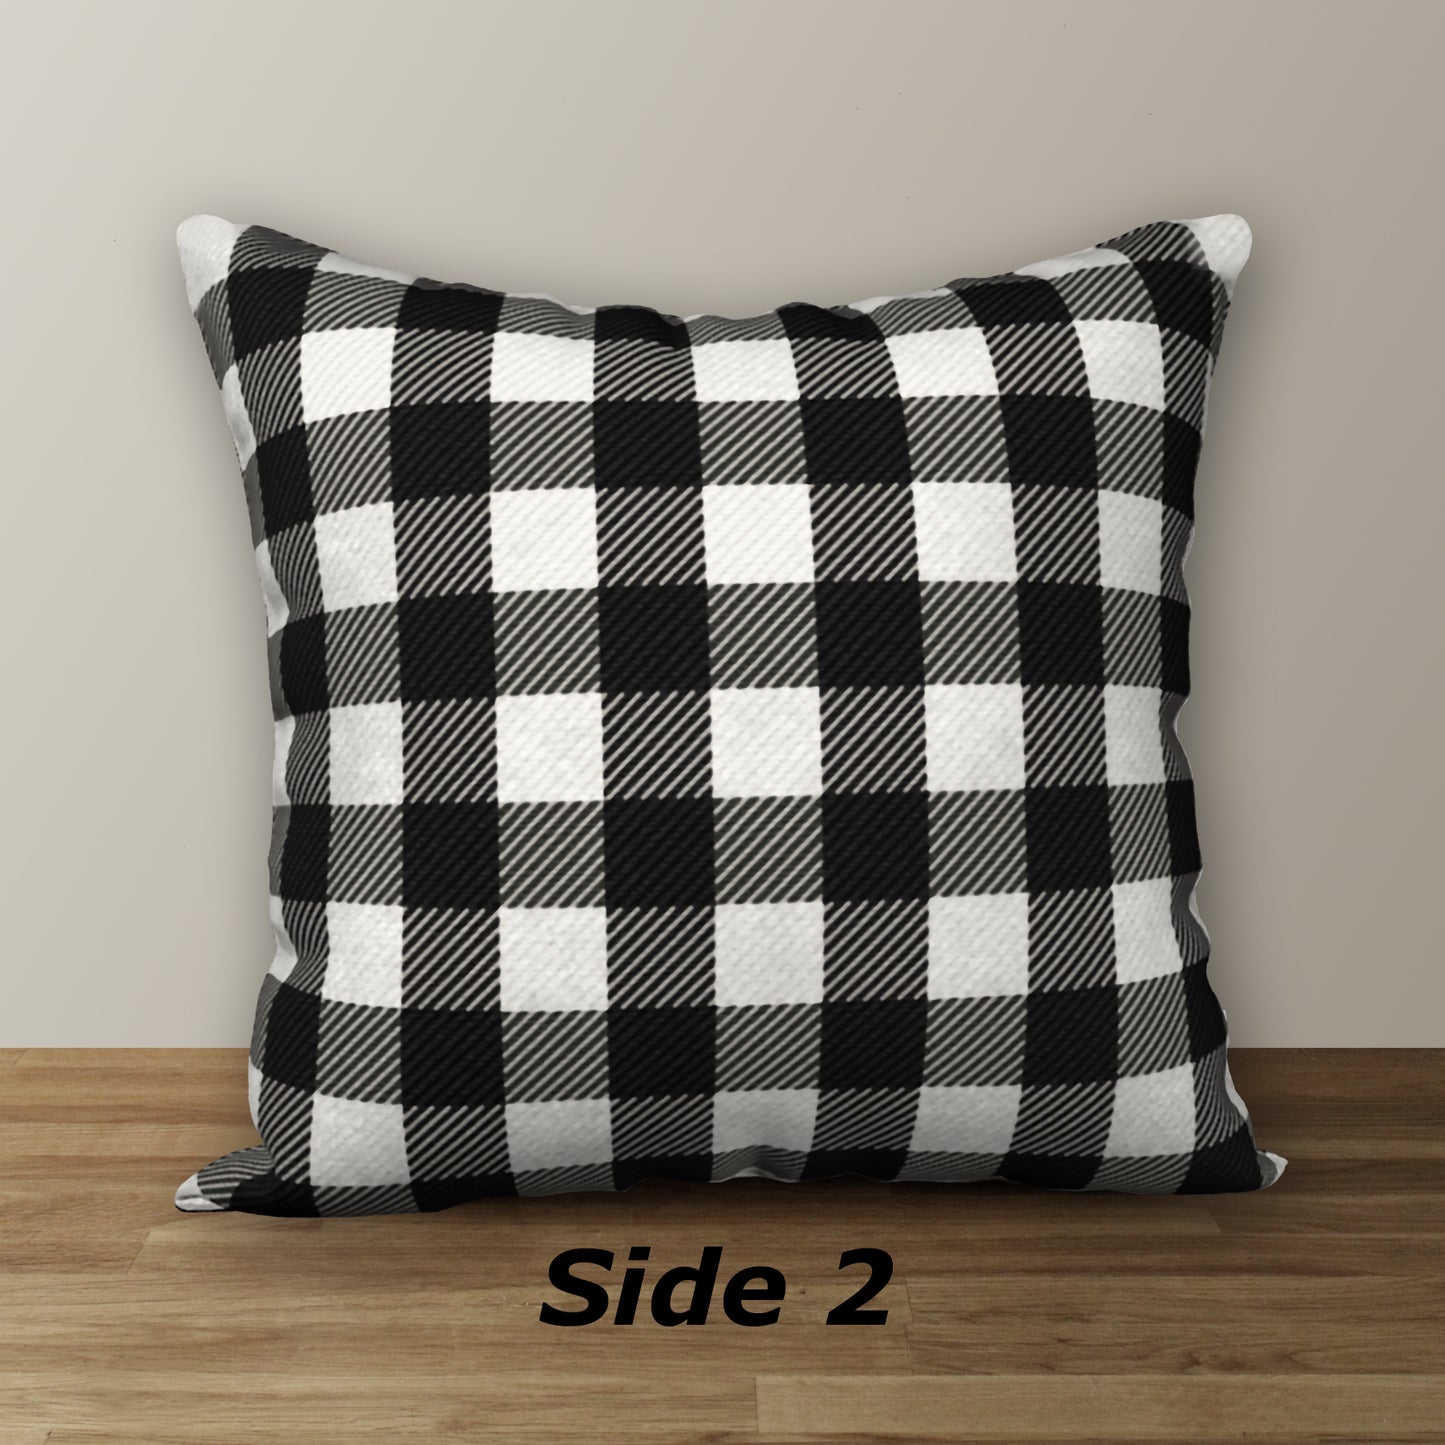 Black & White Buffalo Plaid Star Designer Pillow, 18"x18"